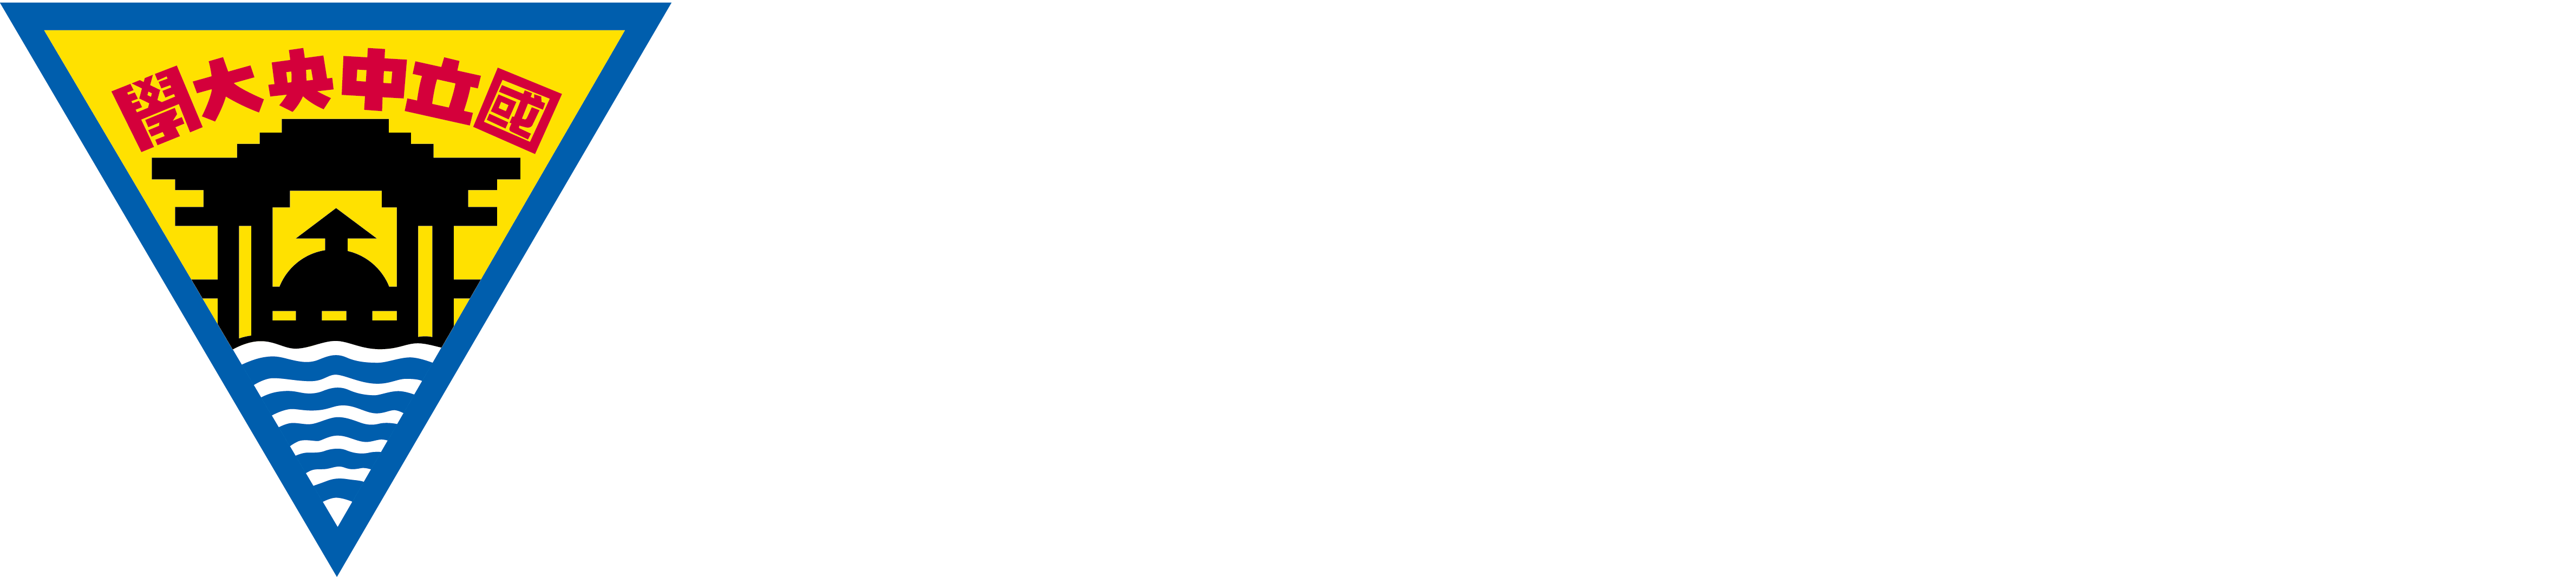 中央大學logo